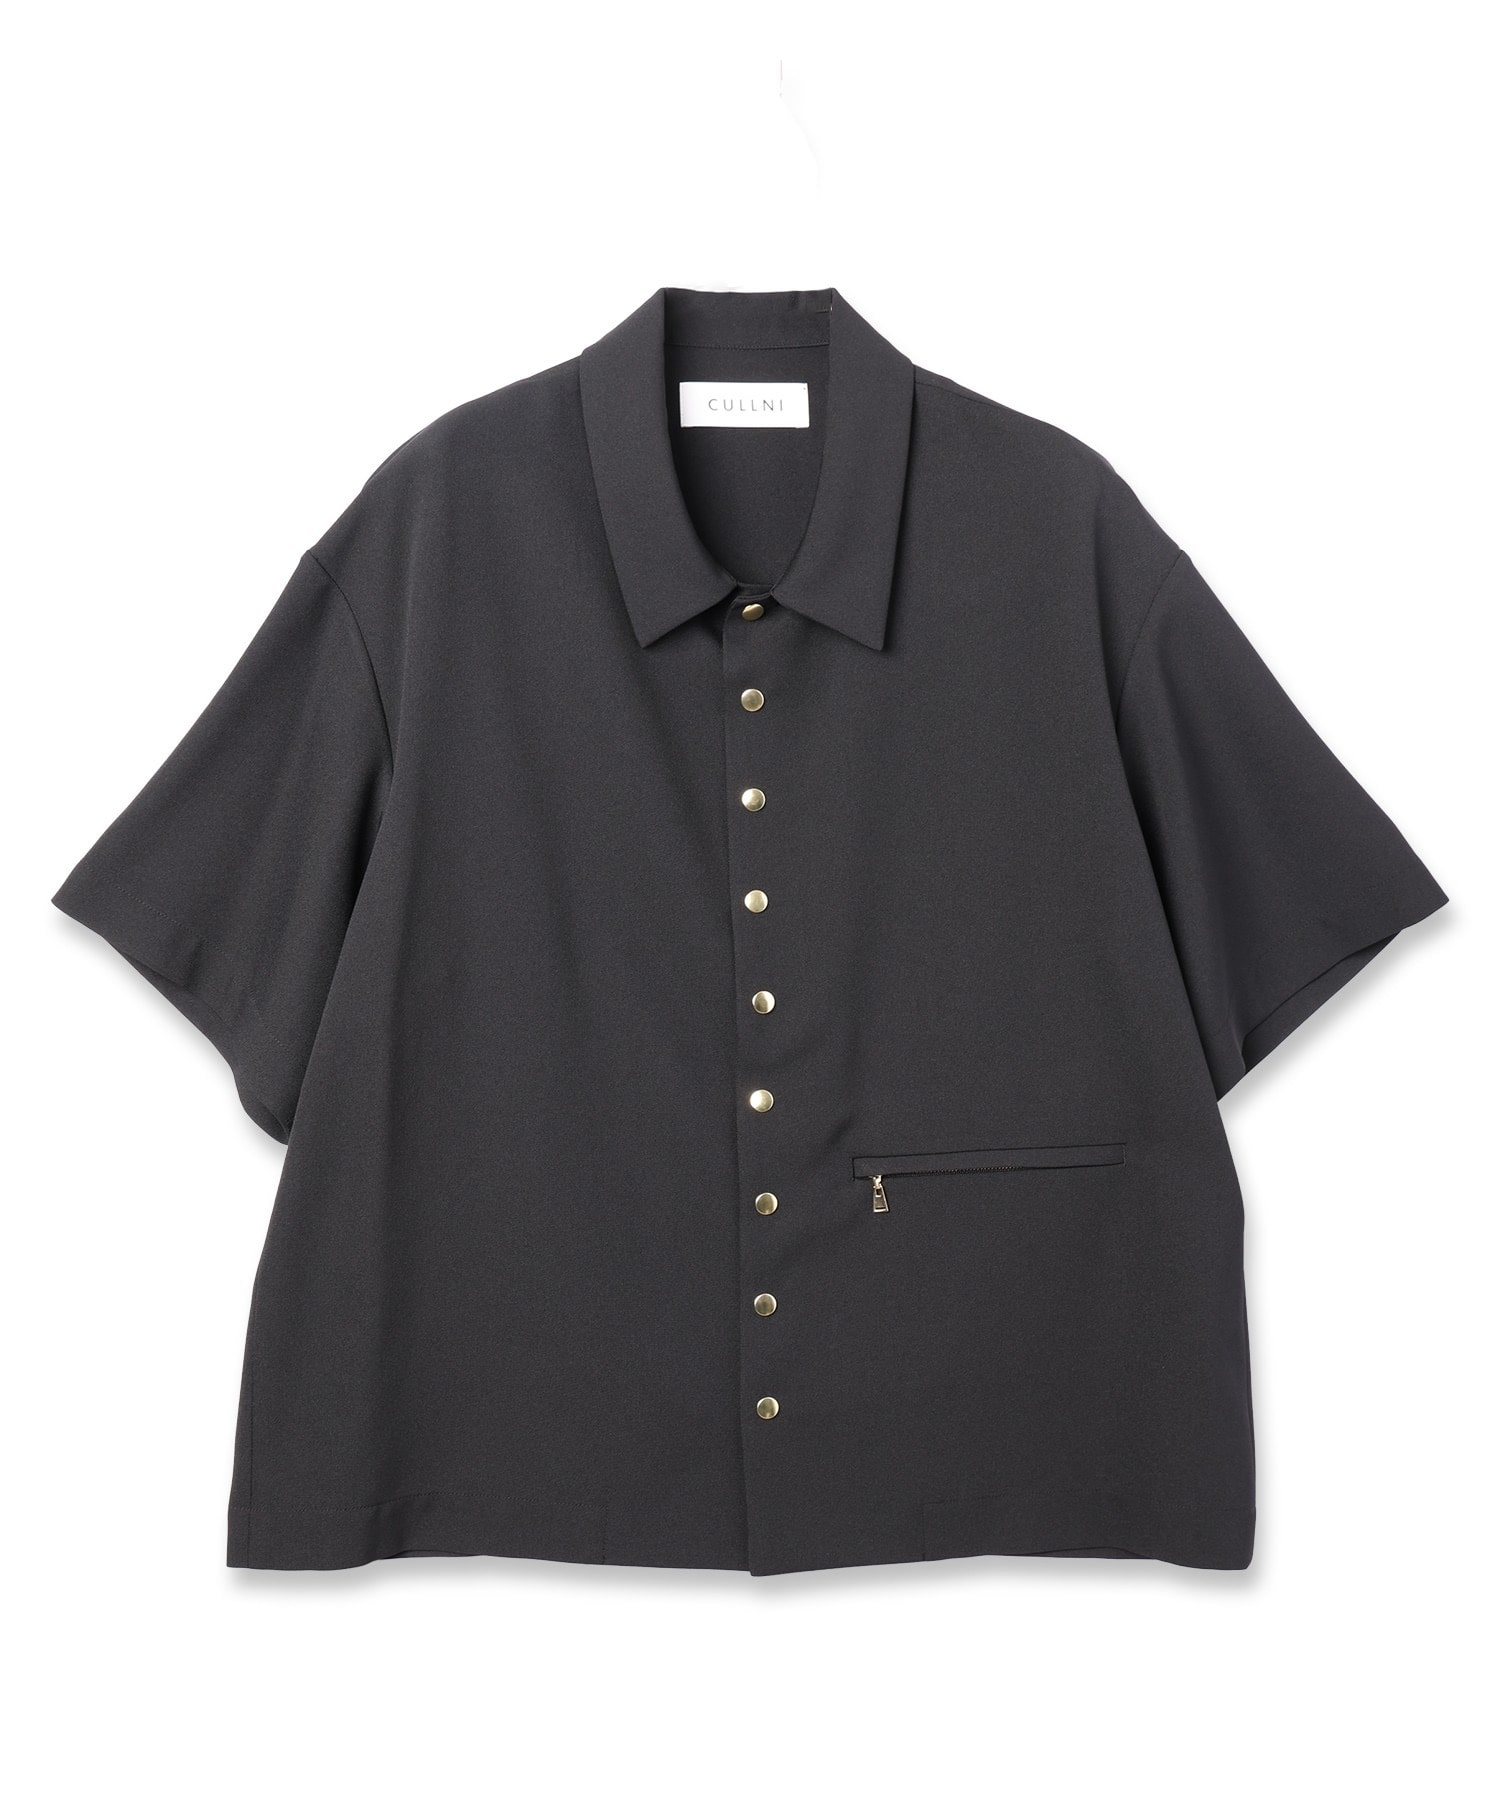 CULLNI (クルニ) / Chambray Twill Dot Button Short Sleeve Shirt / 1